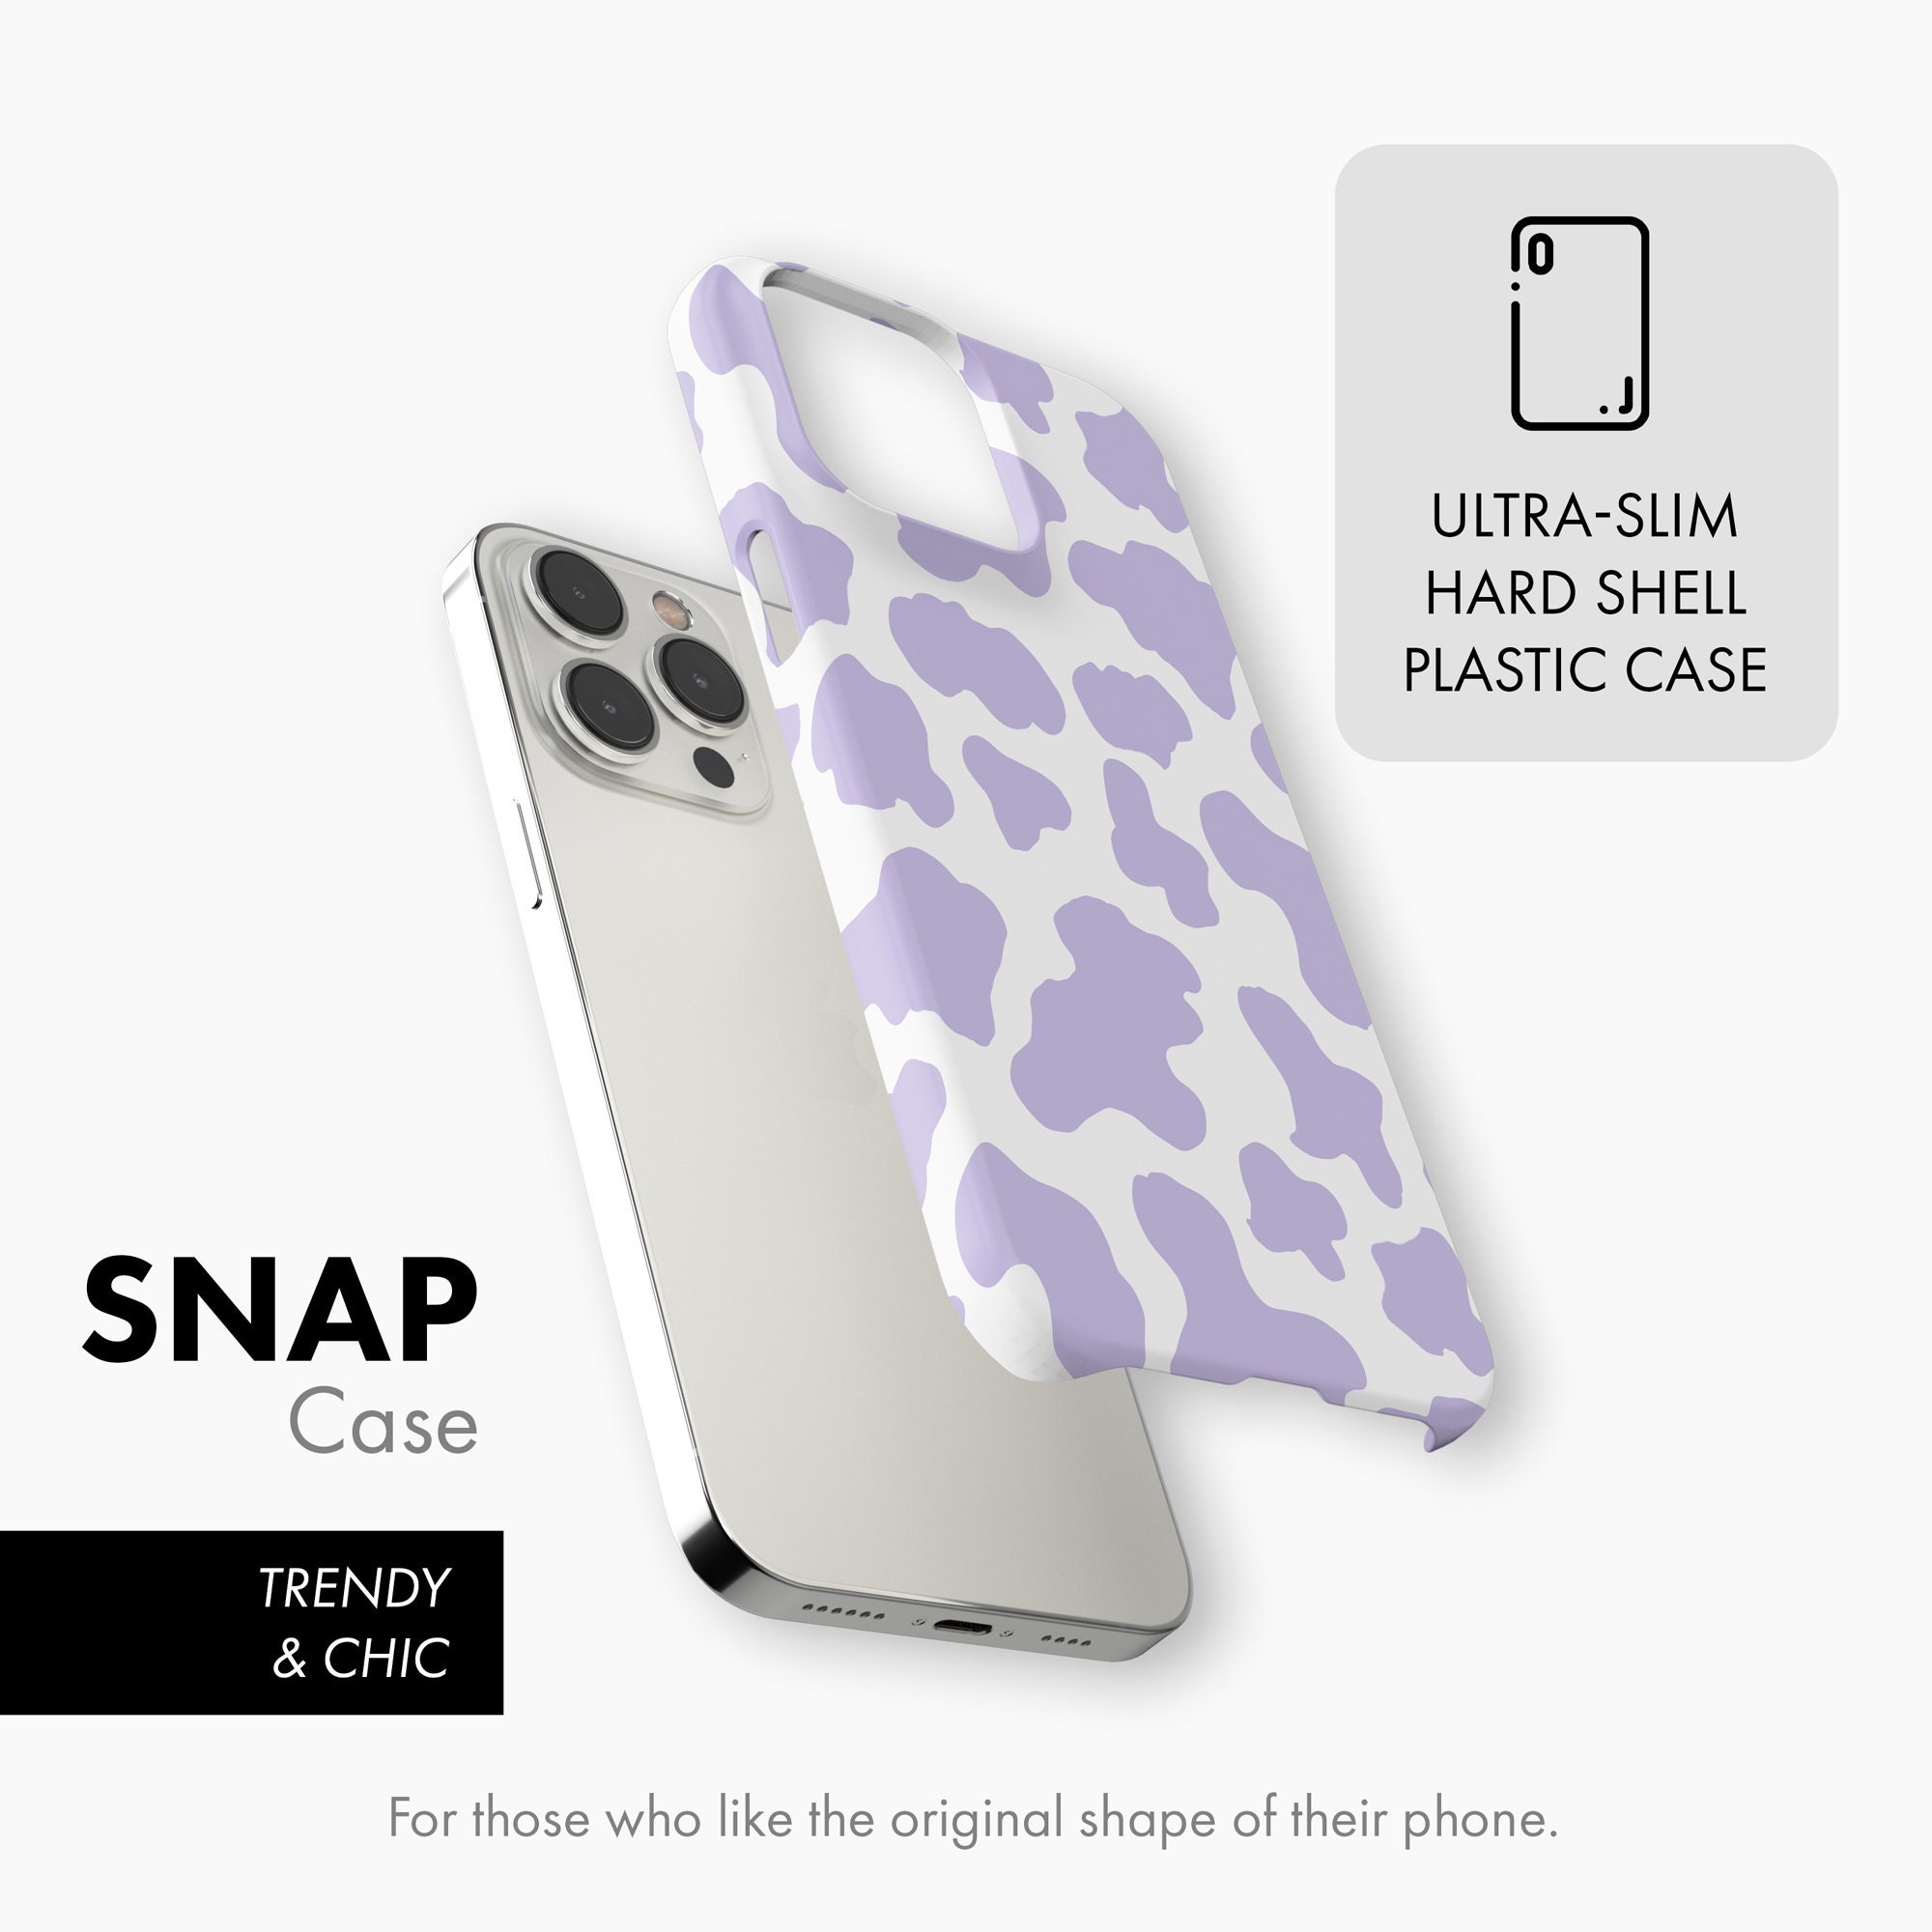 Purple Cow Print iPad Case & Skin for Sale by mmirandalaurenn